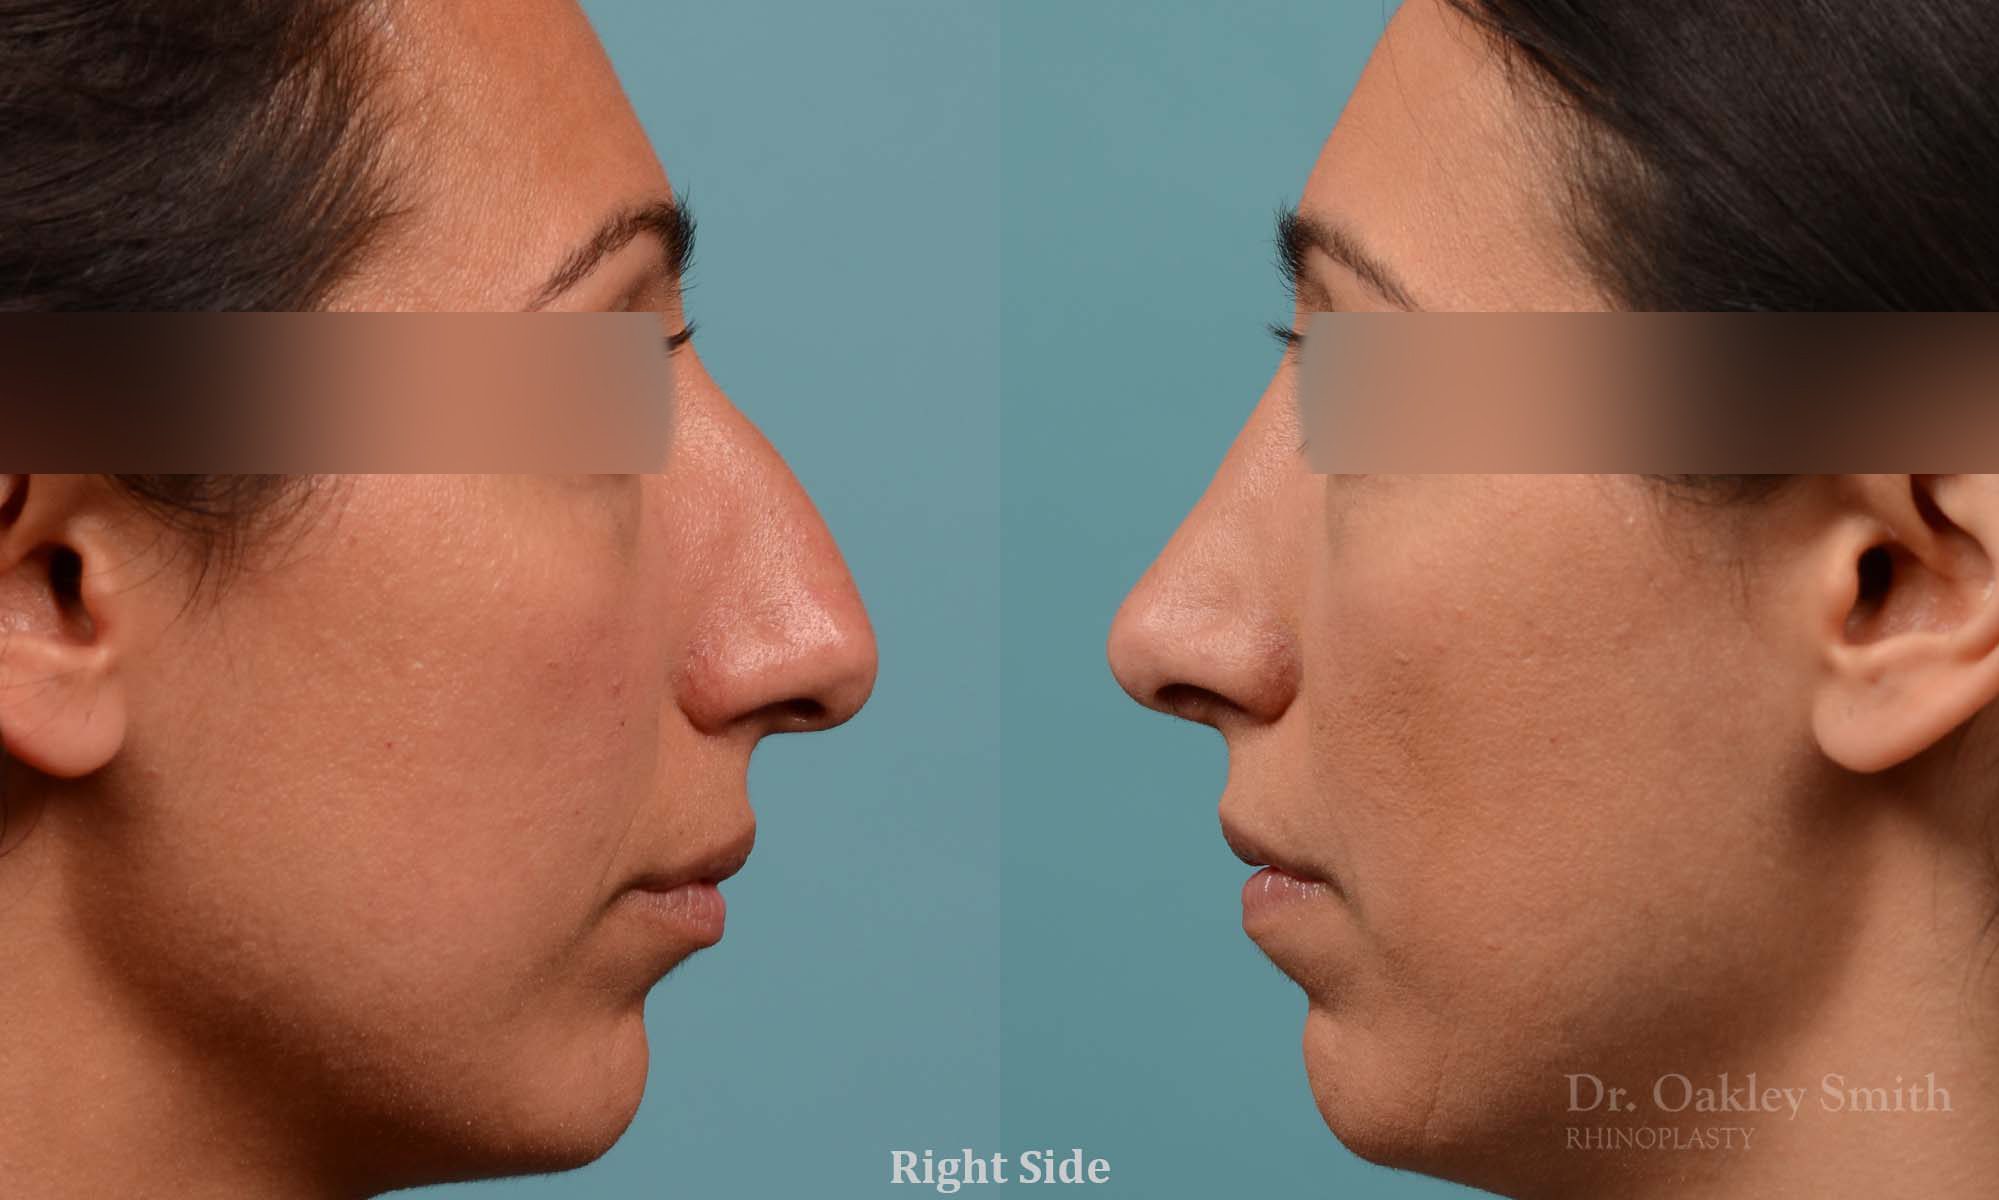 Hump reduction rhinoplasty to create a more feminine nose